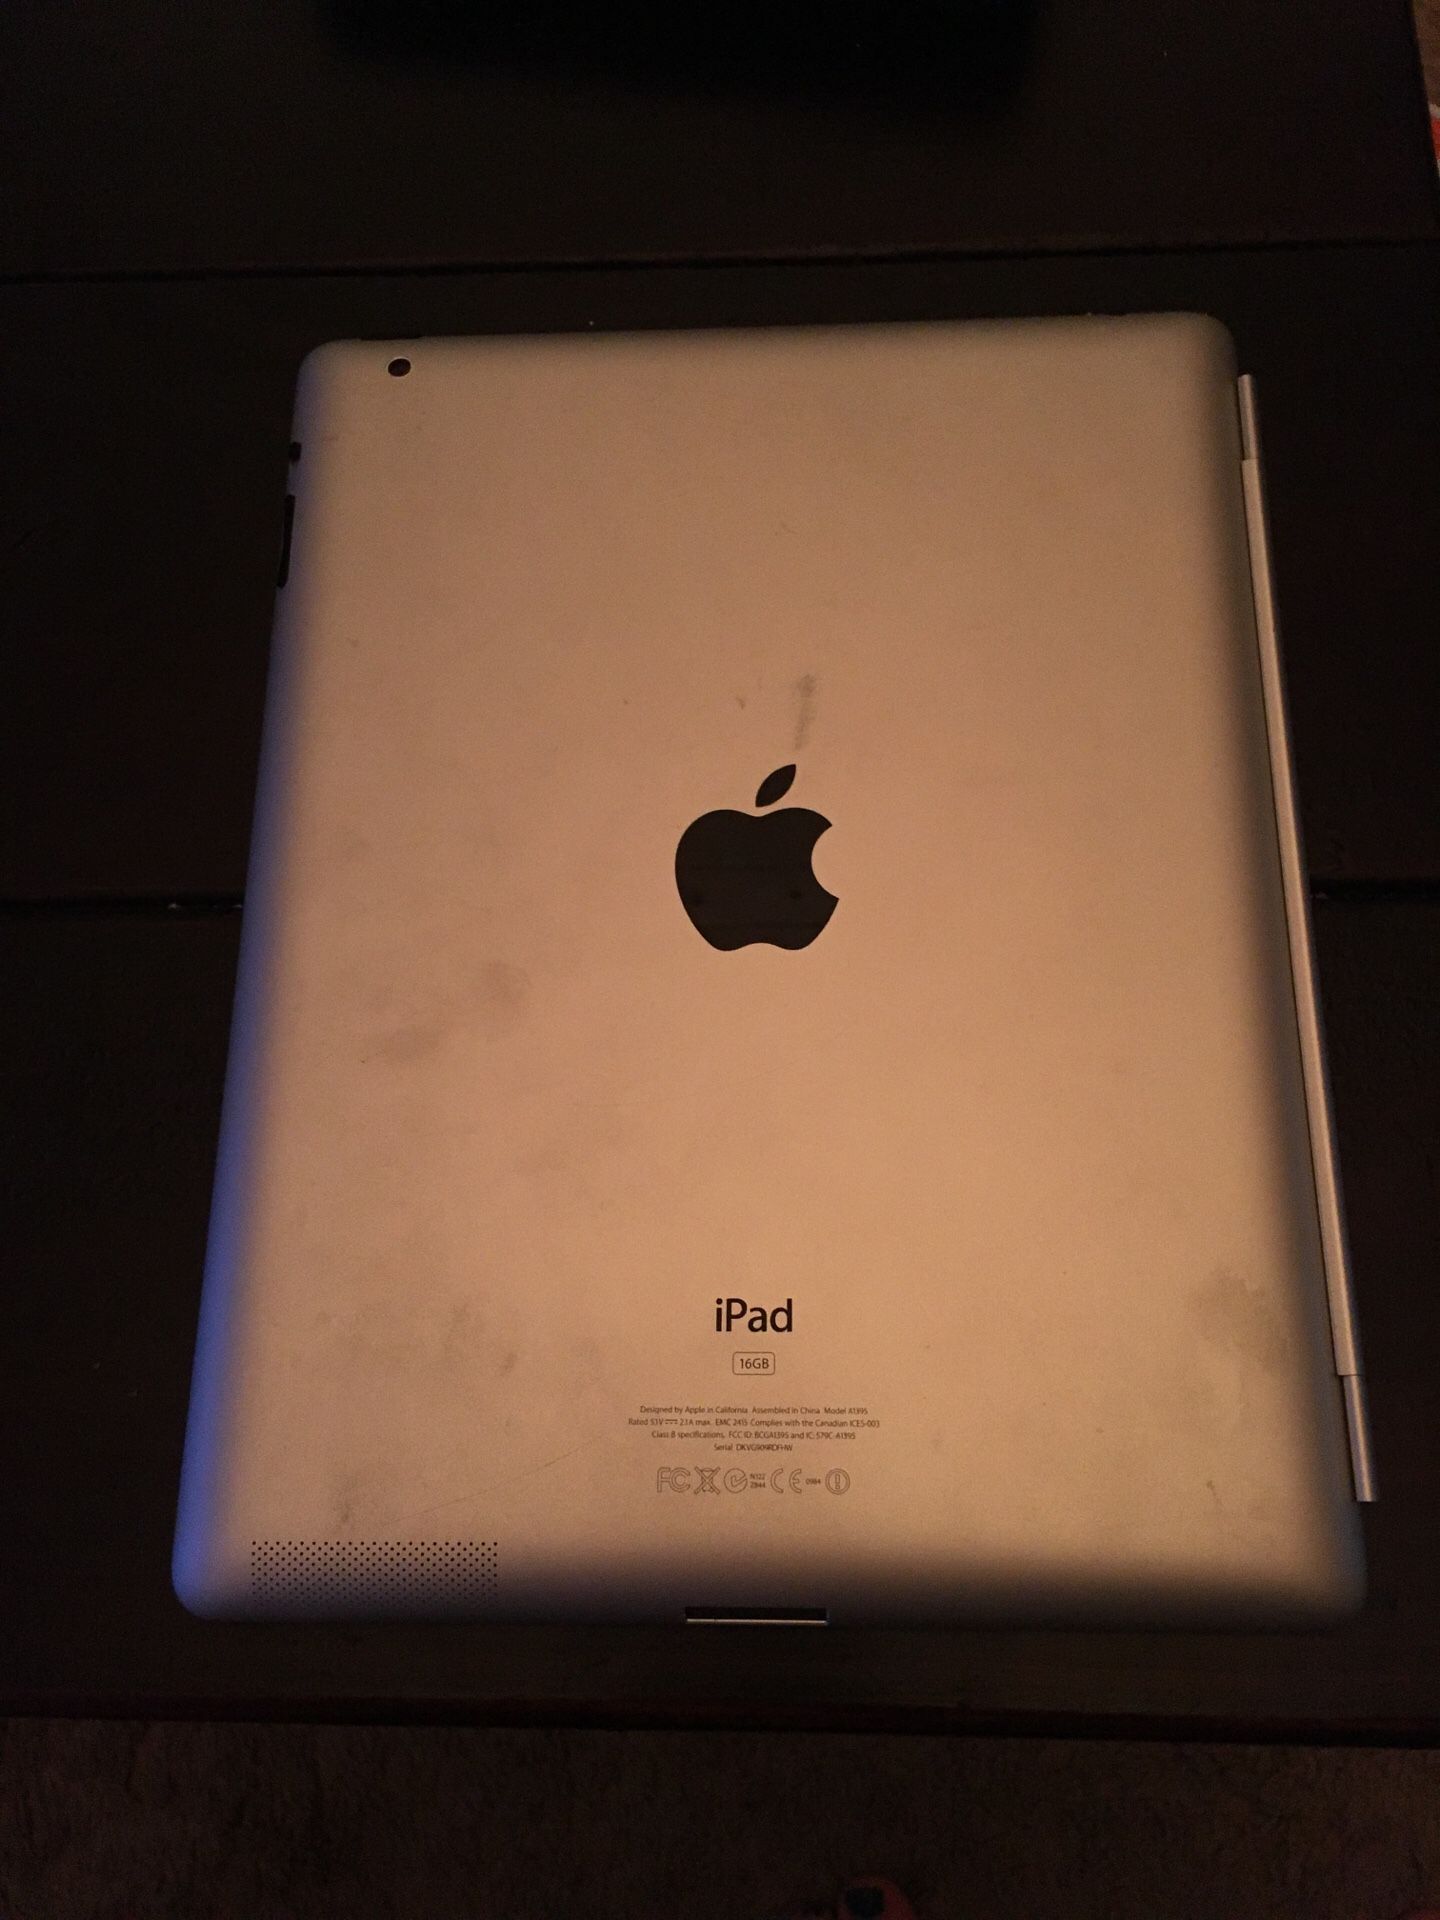 iPad 16gb 2nd gen works great!